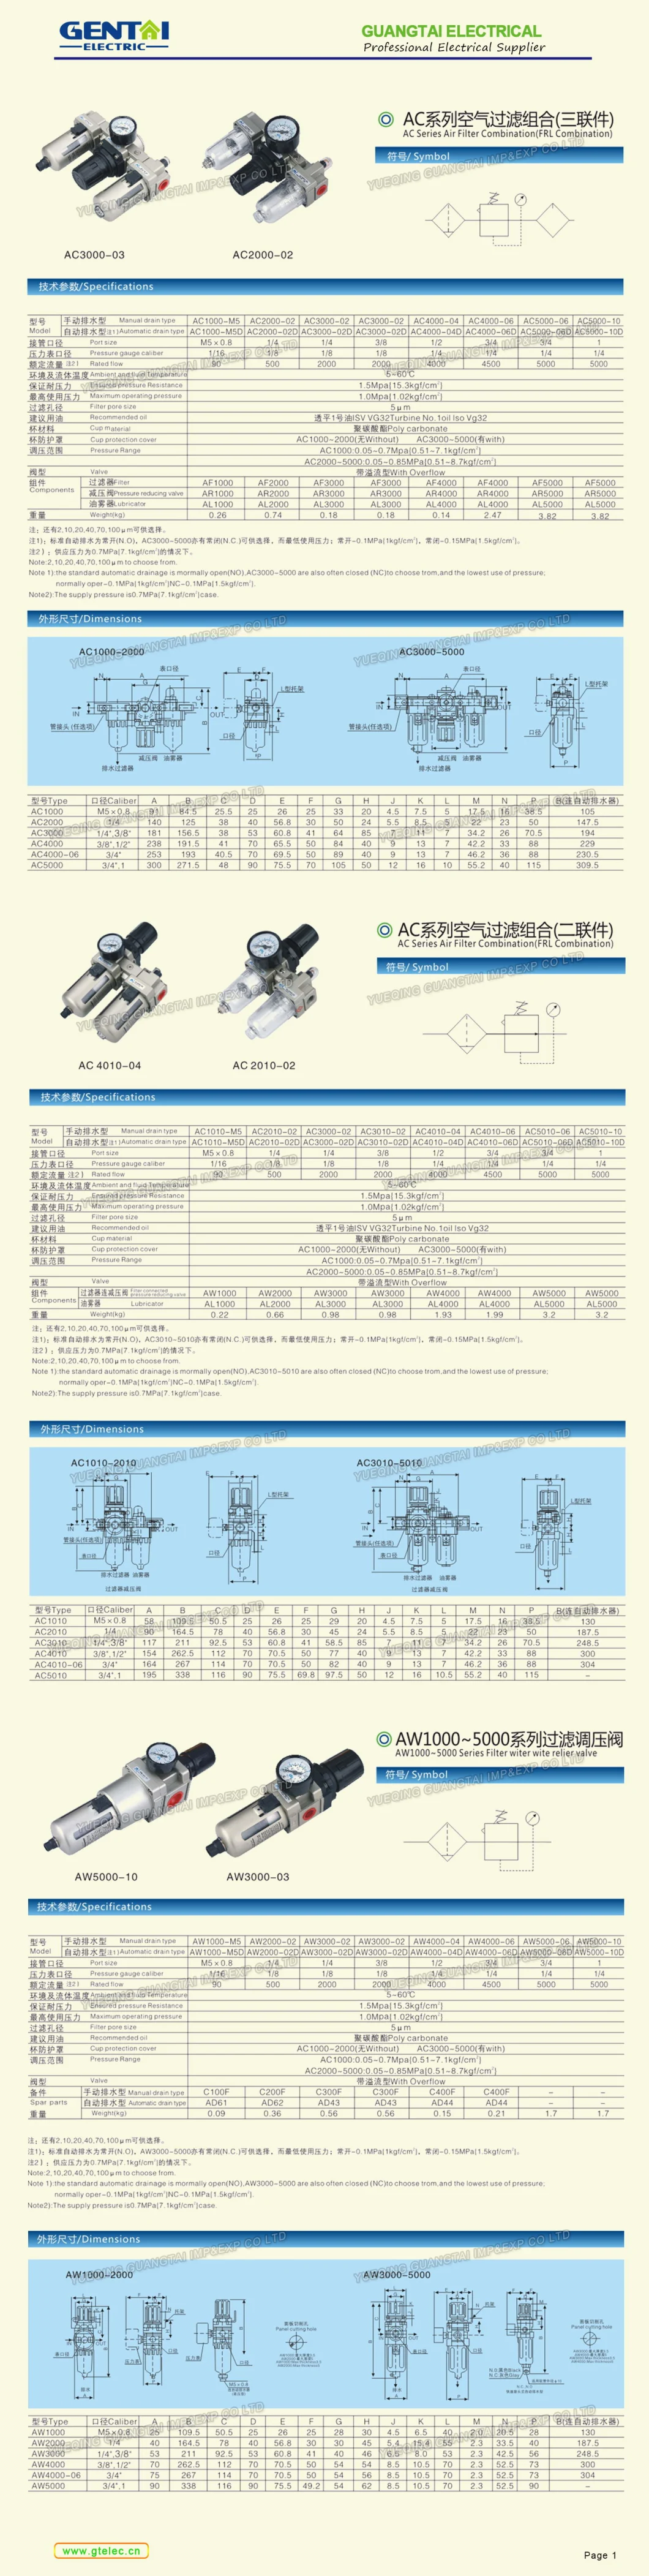 AC4010-04pnecumatic Two Units Frl Combination Air Filter Regulator & Lubricator